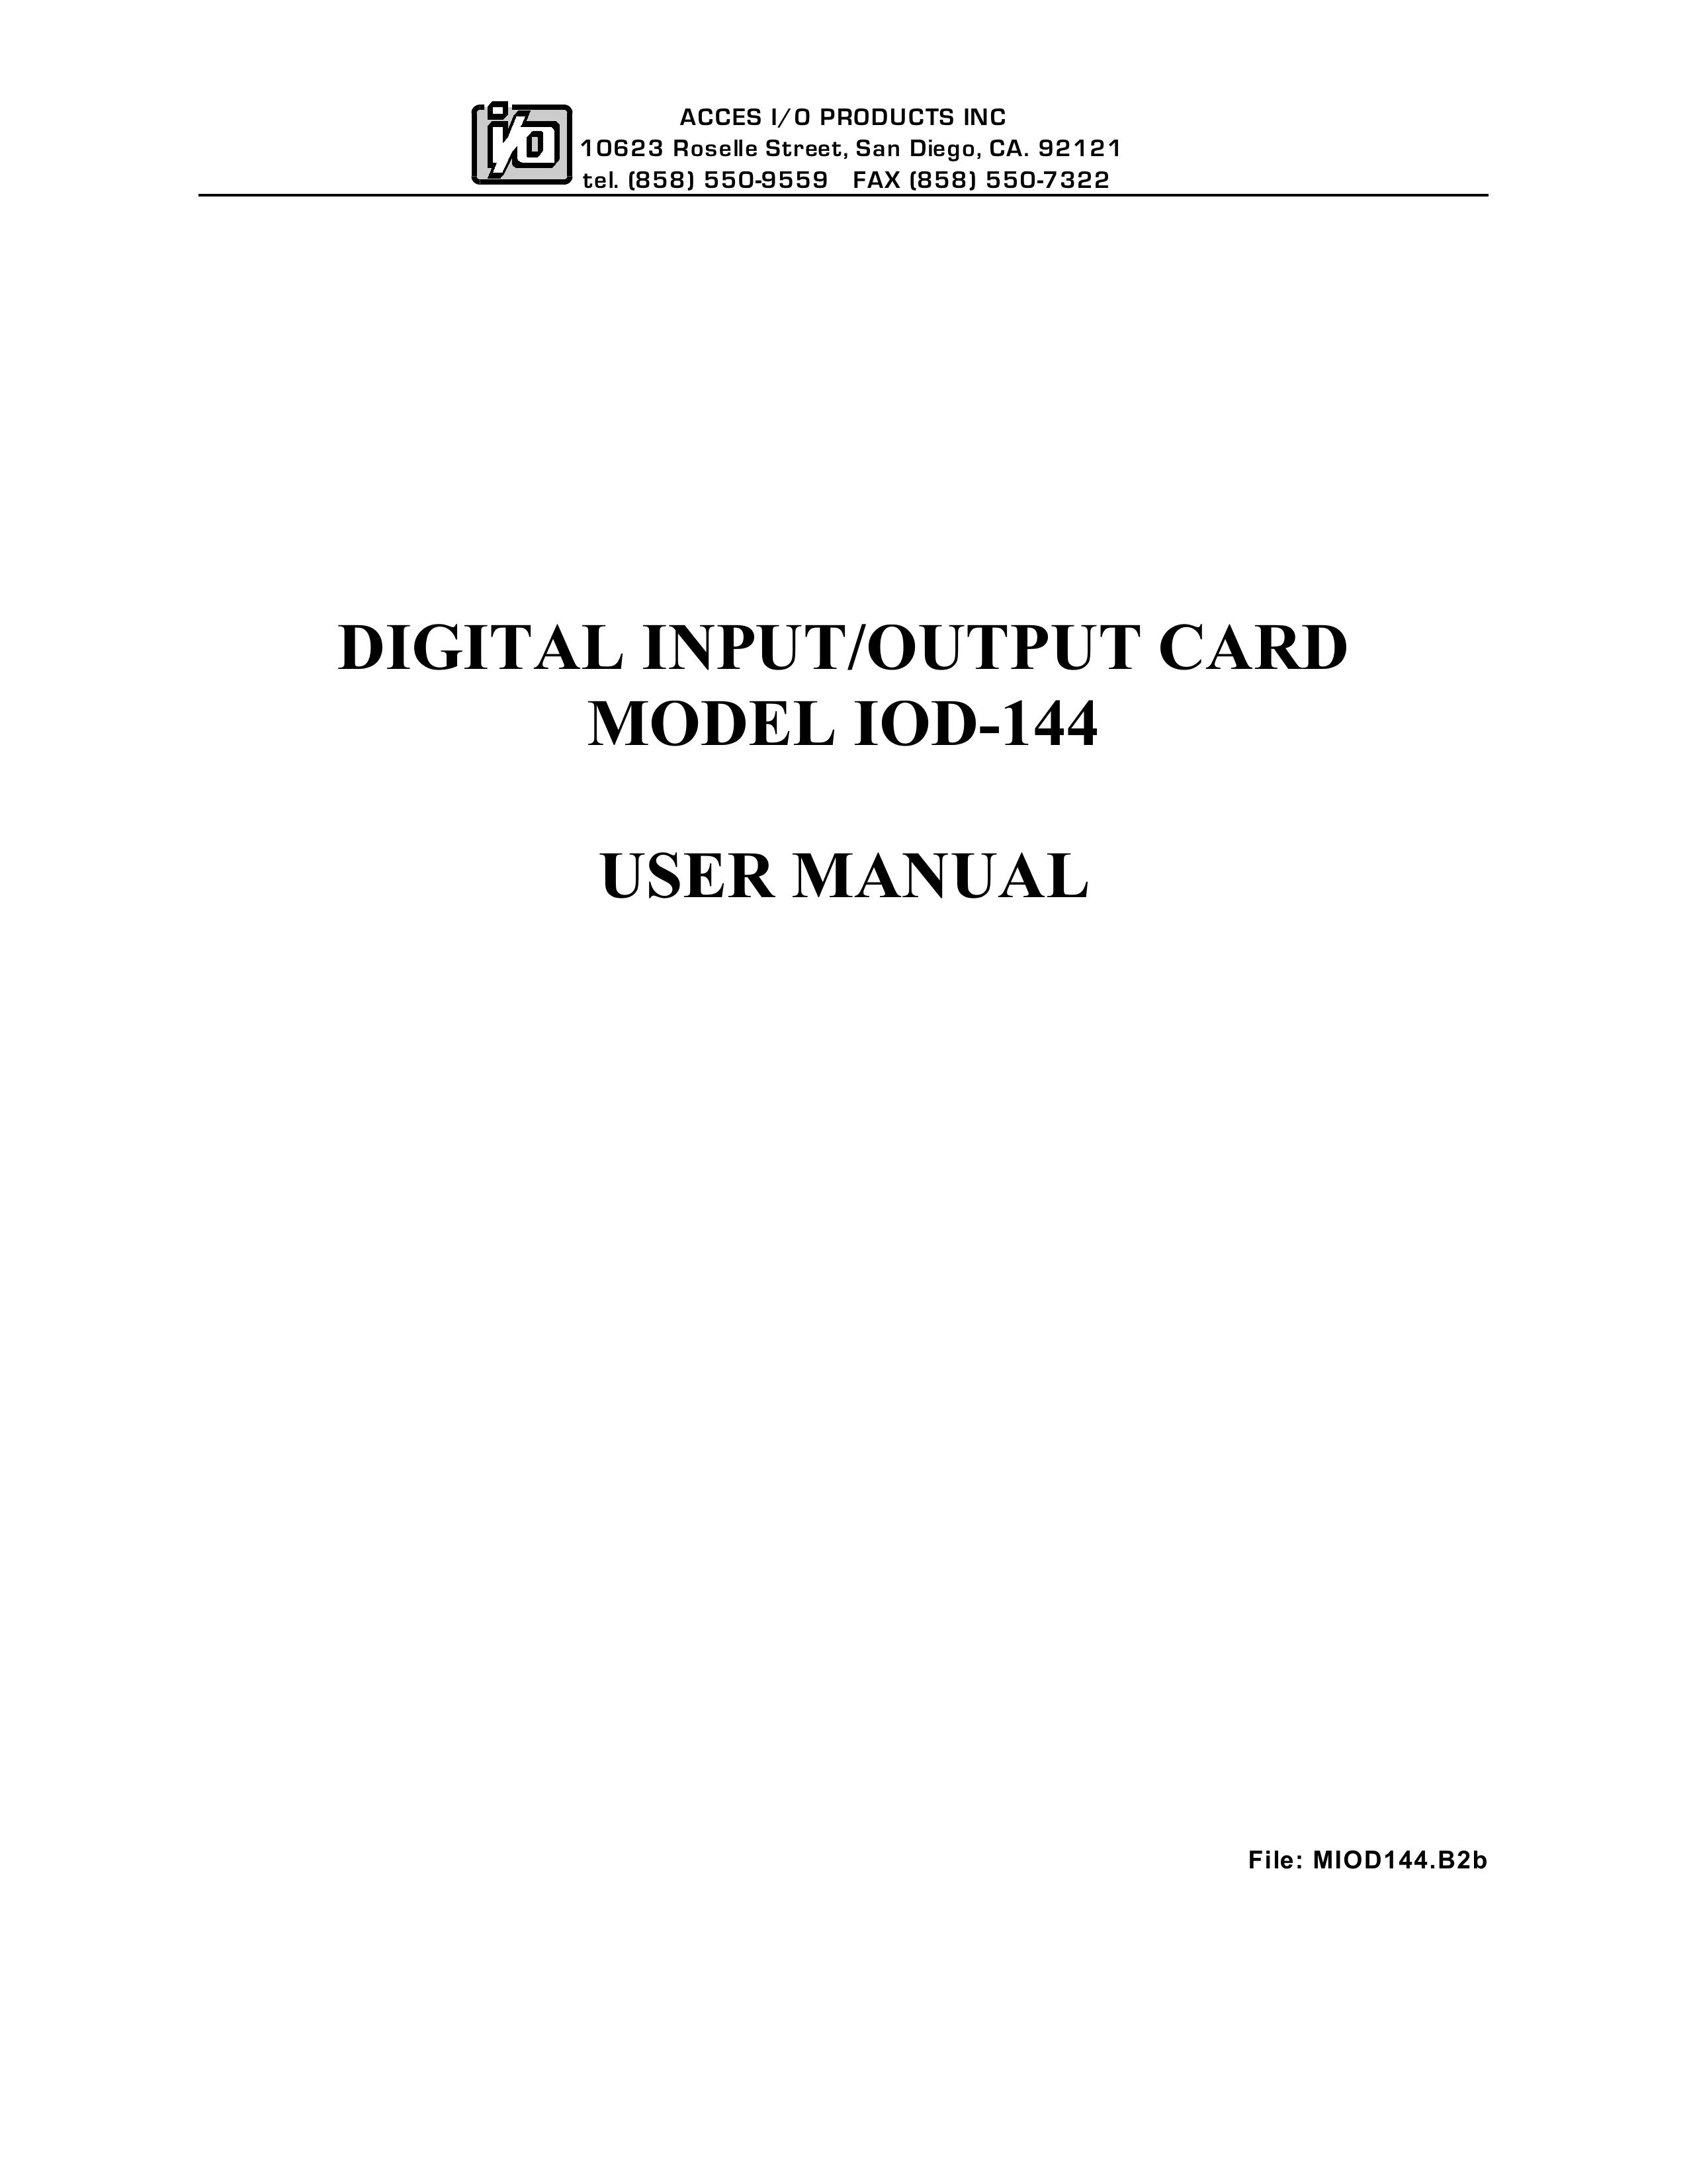 Access IOD-144 Microscope & Magnifier User Manual